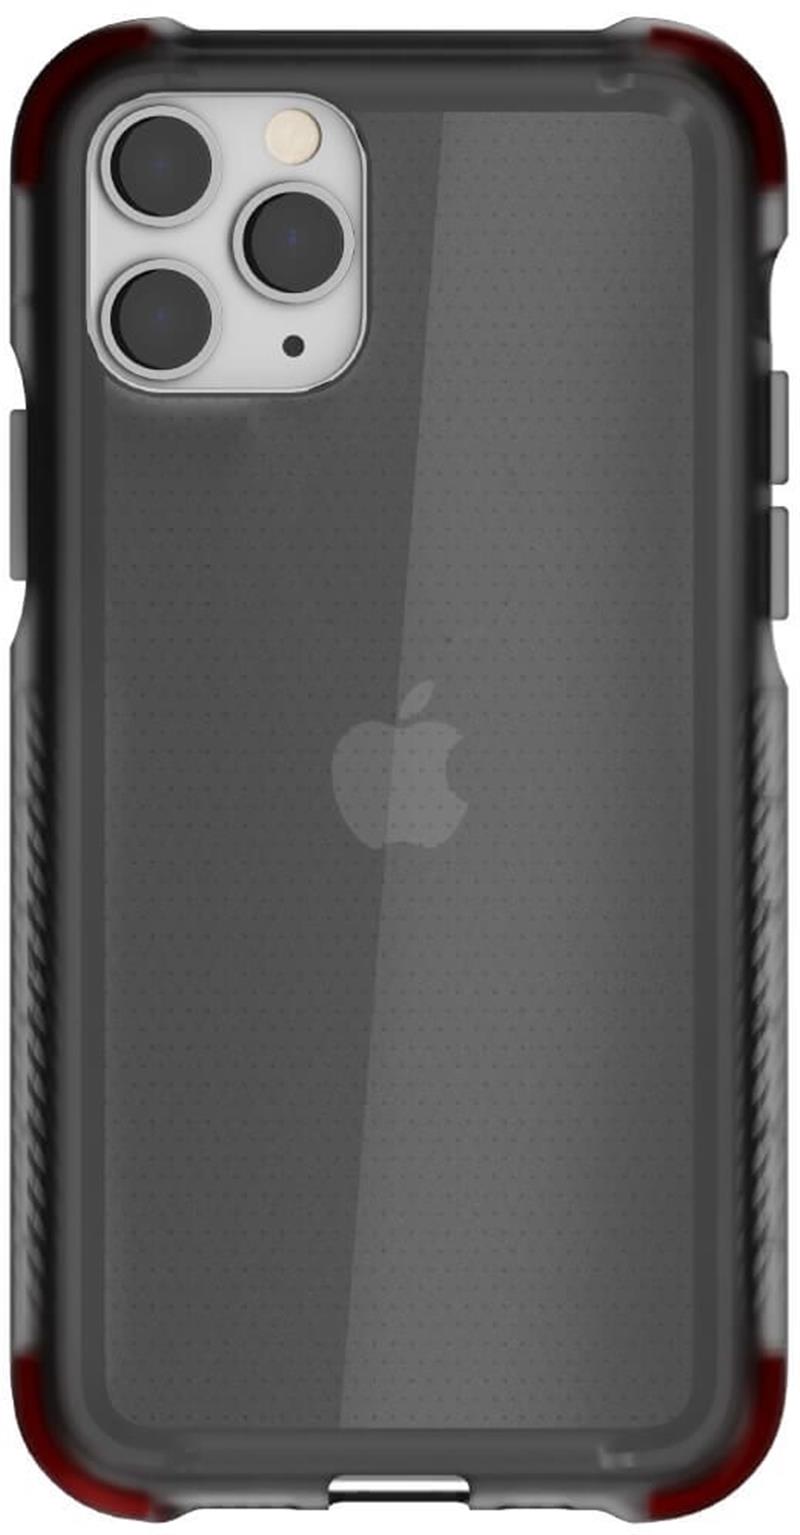 Ghostek Covert 3 Protective Case Apple iPhone 11 Pro Smoke